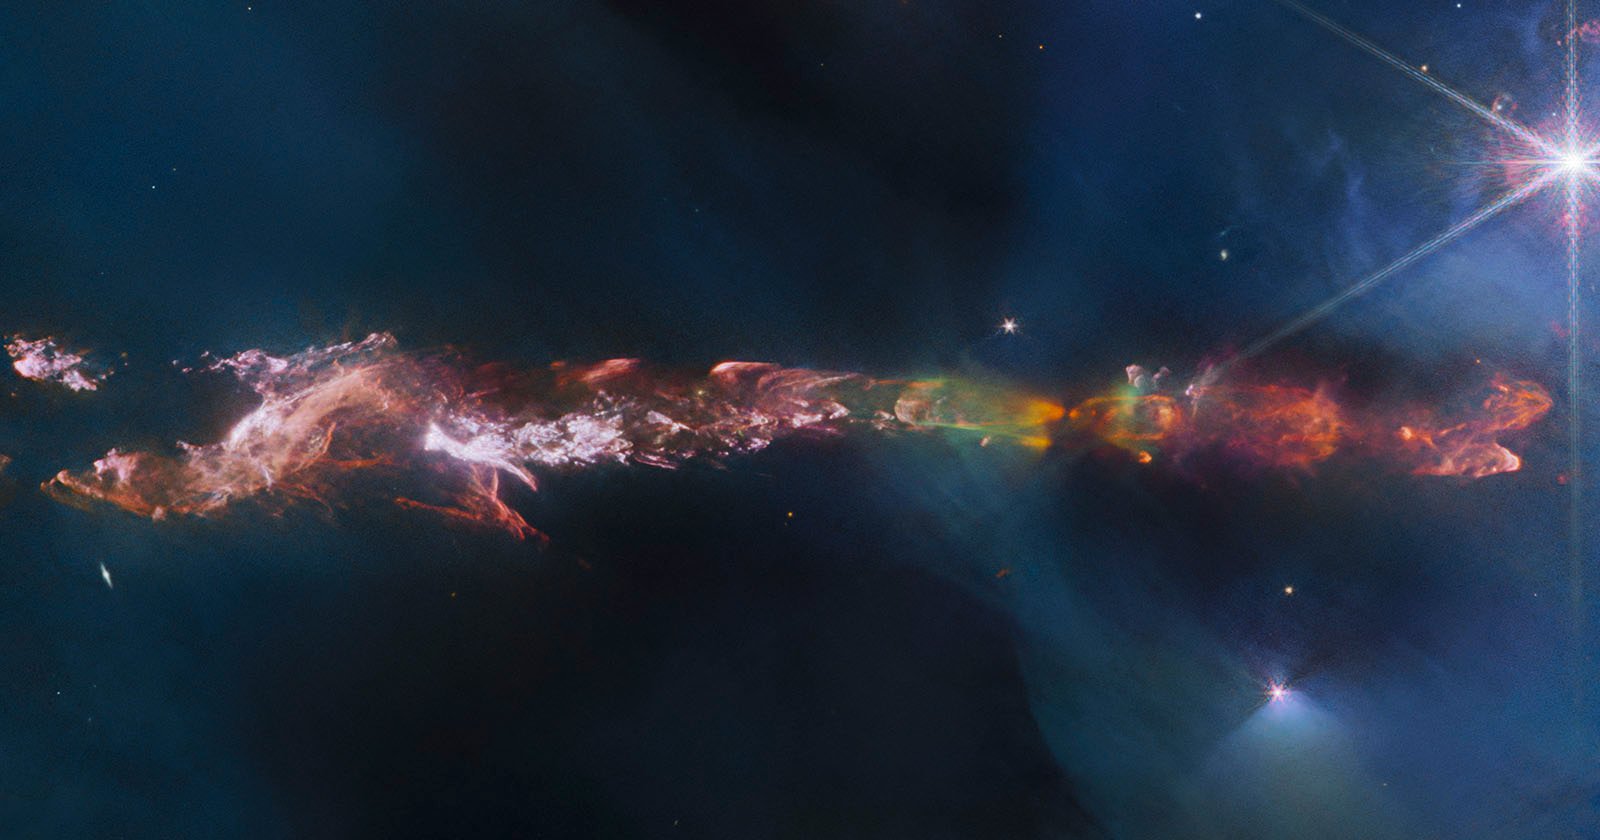 Gaze Upon Webbs Latest Photo of a Colorful Stellar Nursery